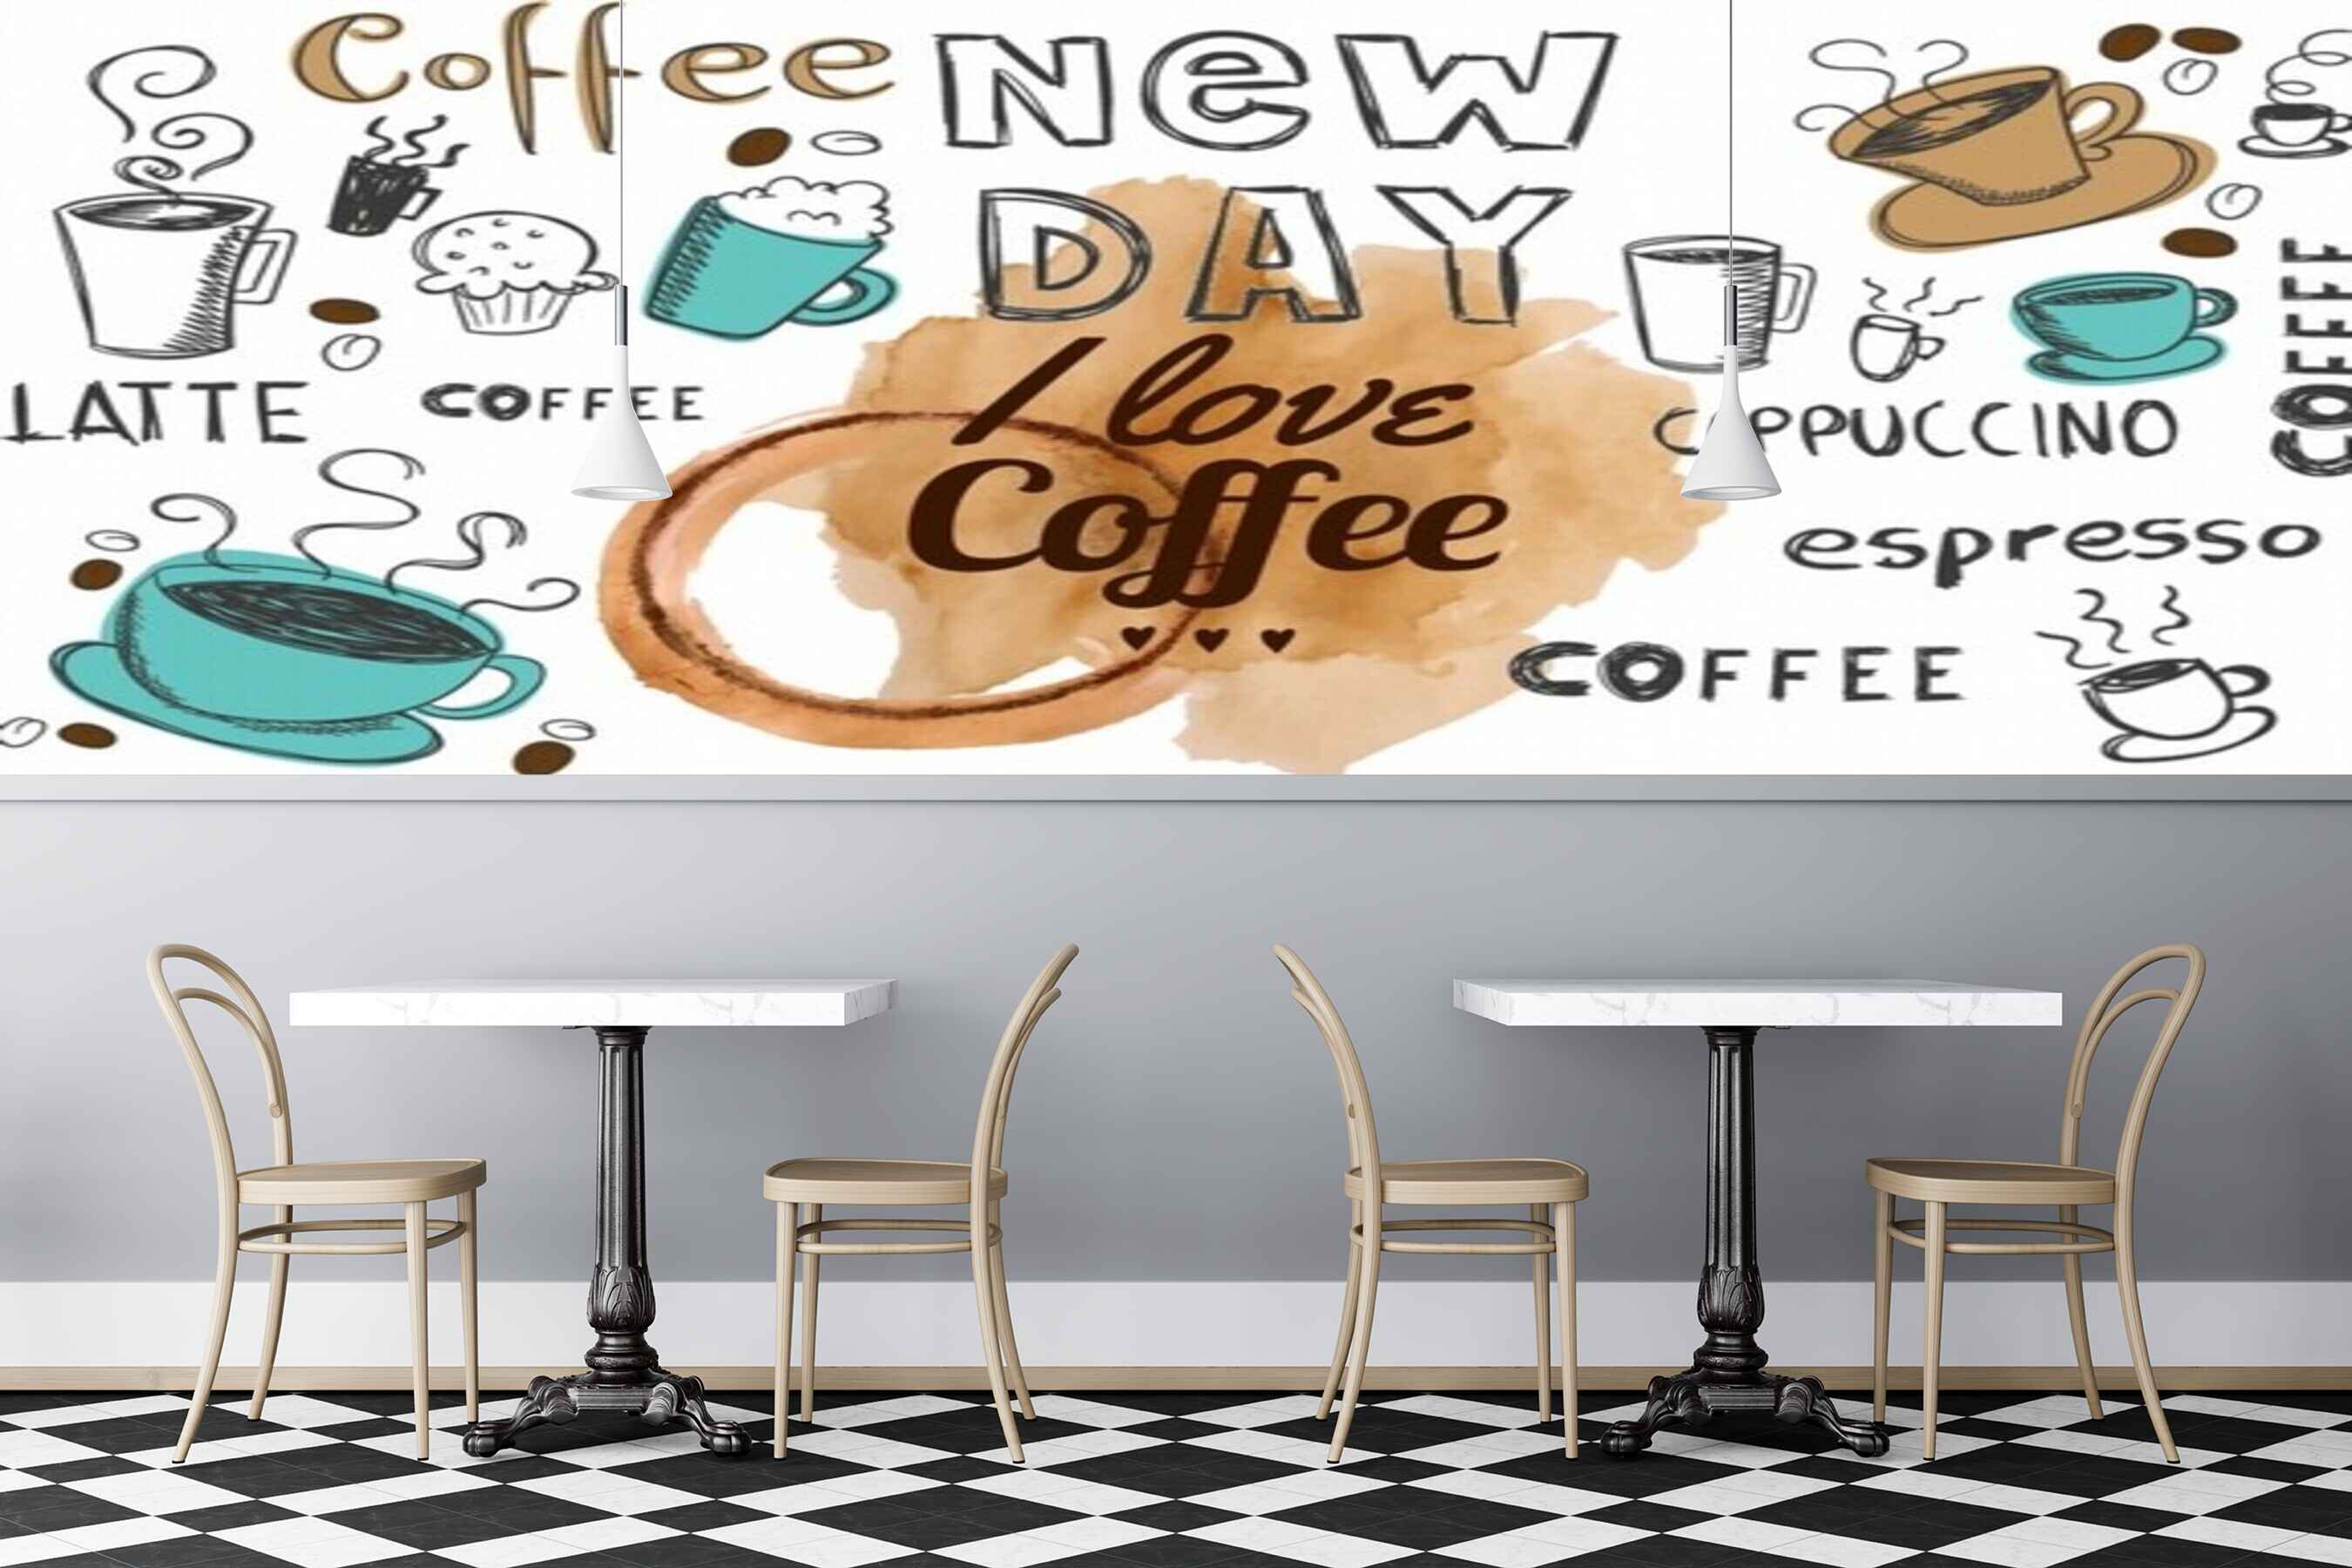 Avikalp MWZ3072 Coffee Love Lattee Espresso Cappucino HD Wallpaper for Cafe Restaurant